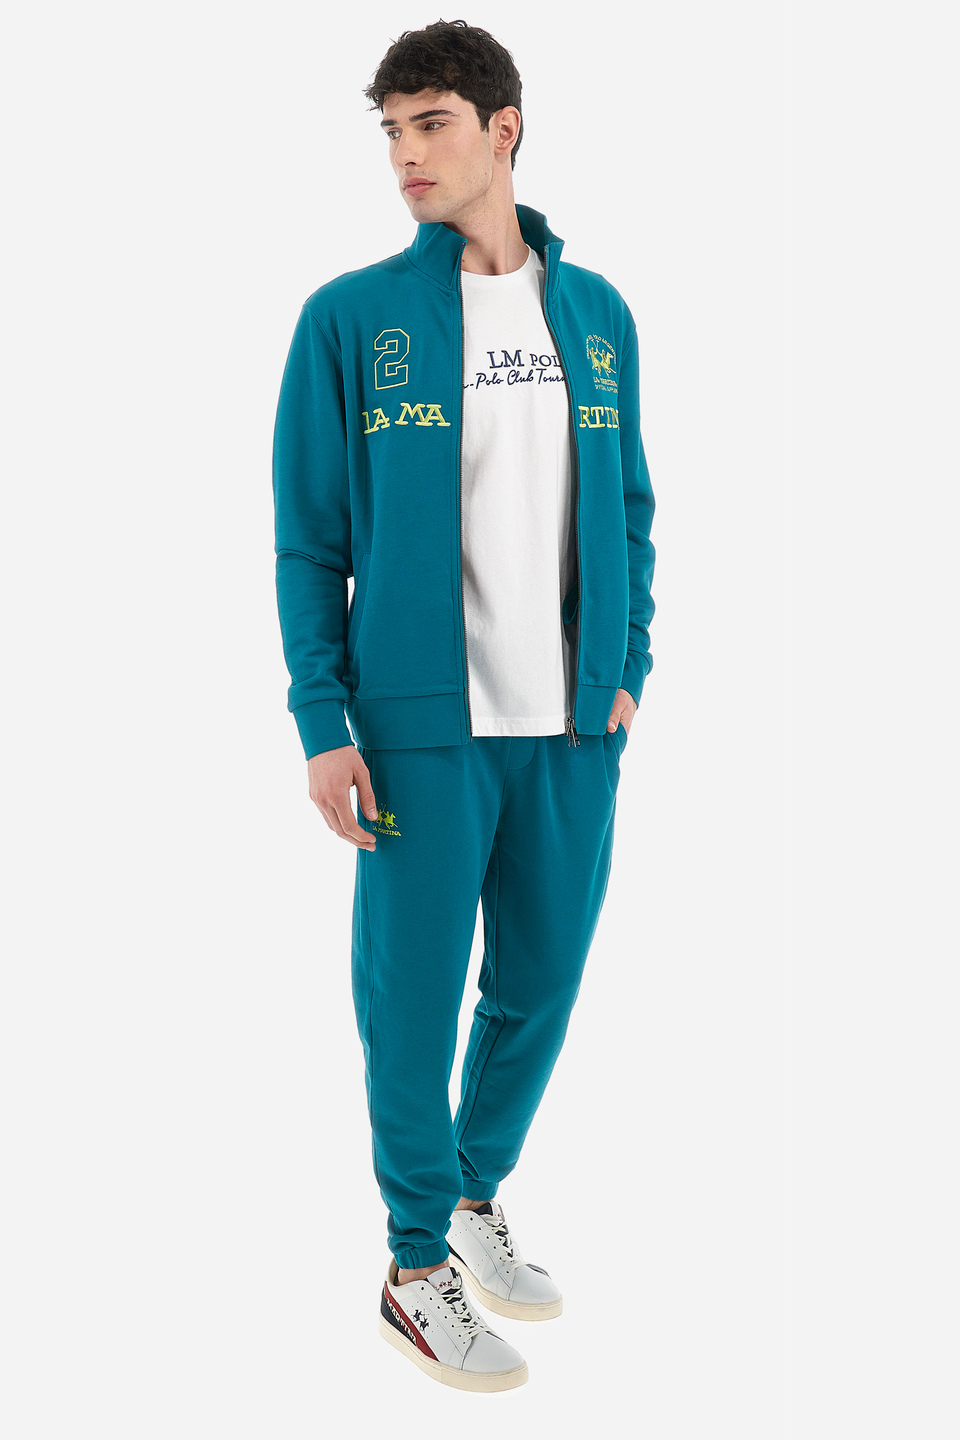 Langarm-Sweatshirt mit Reißverschluss für Herren in normaler Passform - Quilt | La Martina - Official Online Shop